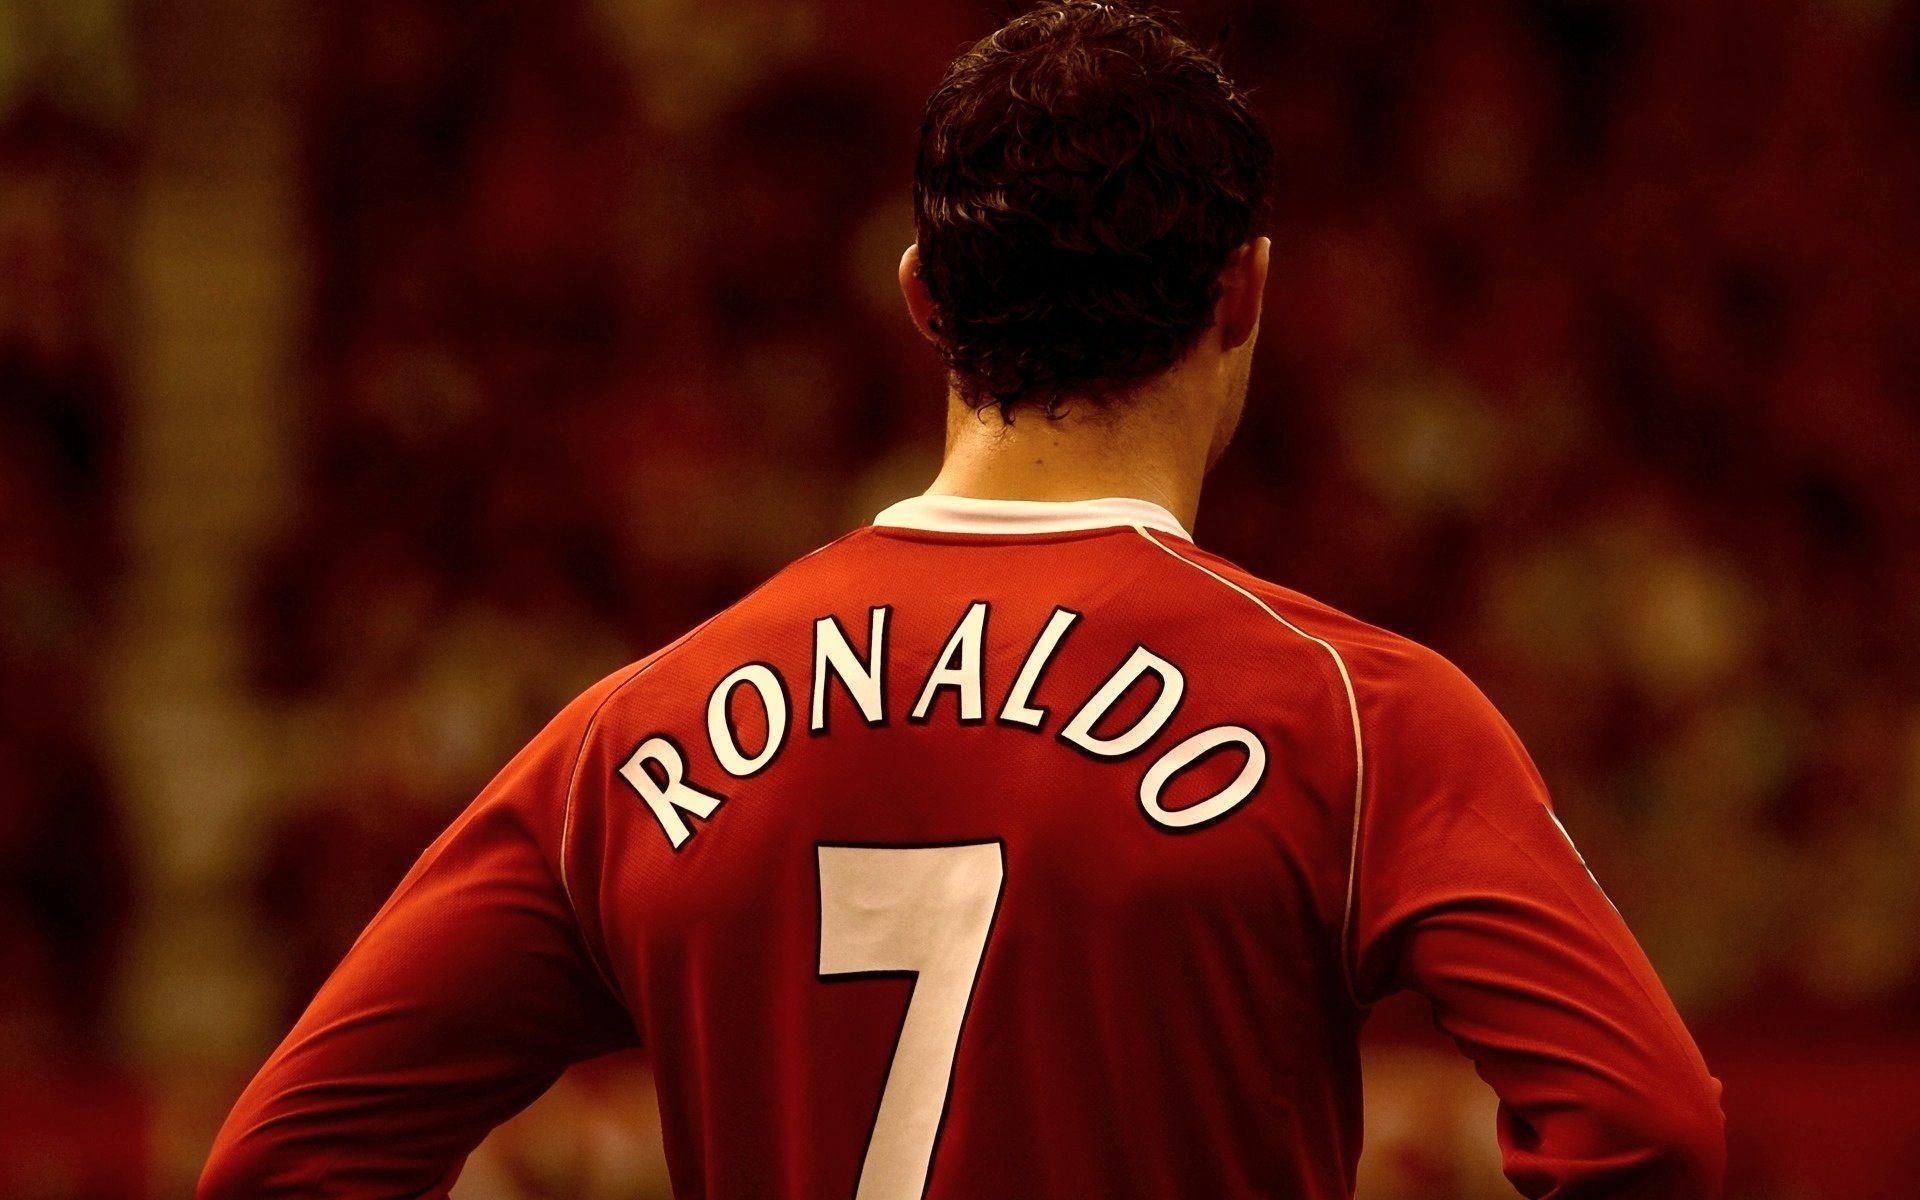 Cristiano Ronaldo Amazing Football Player Wallpaper Free Download